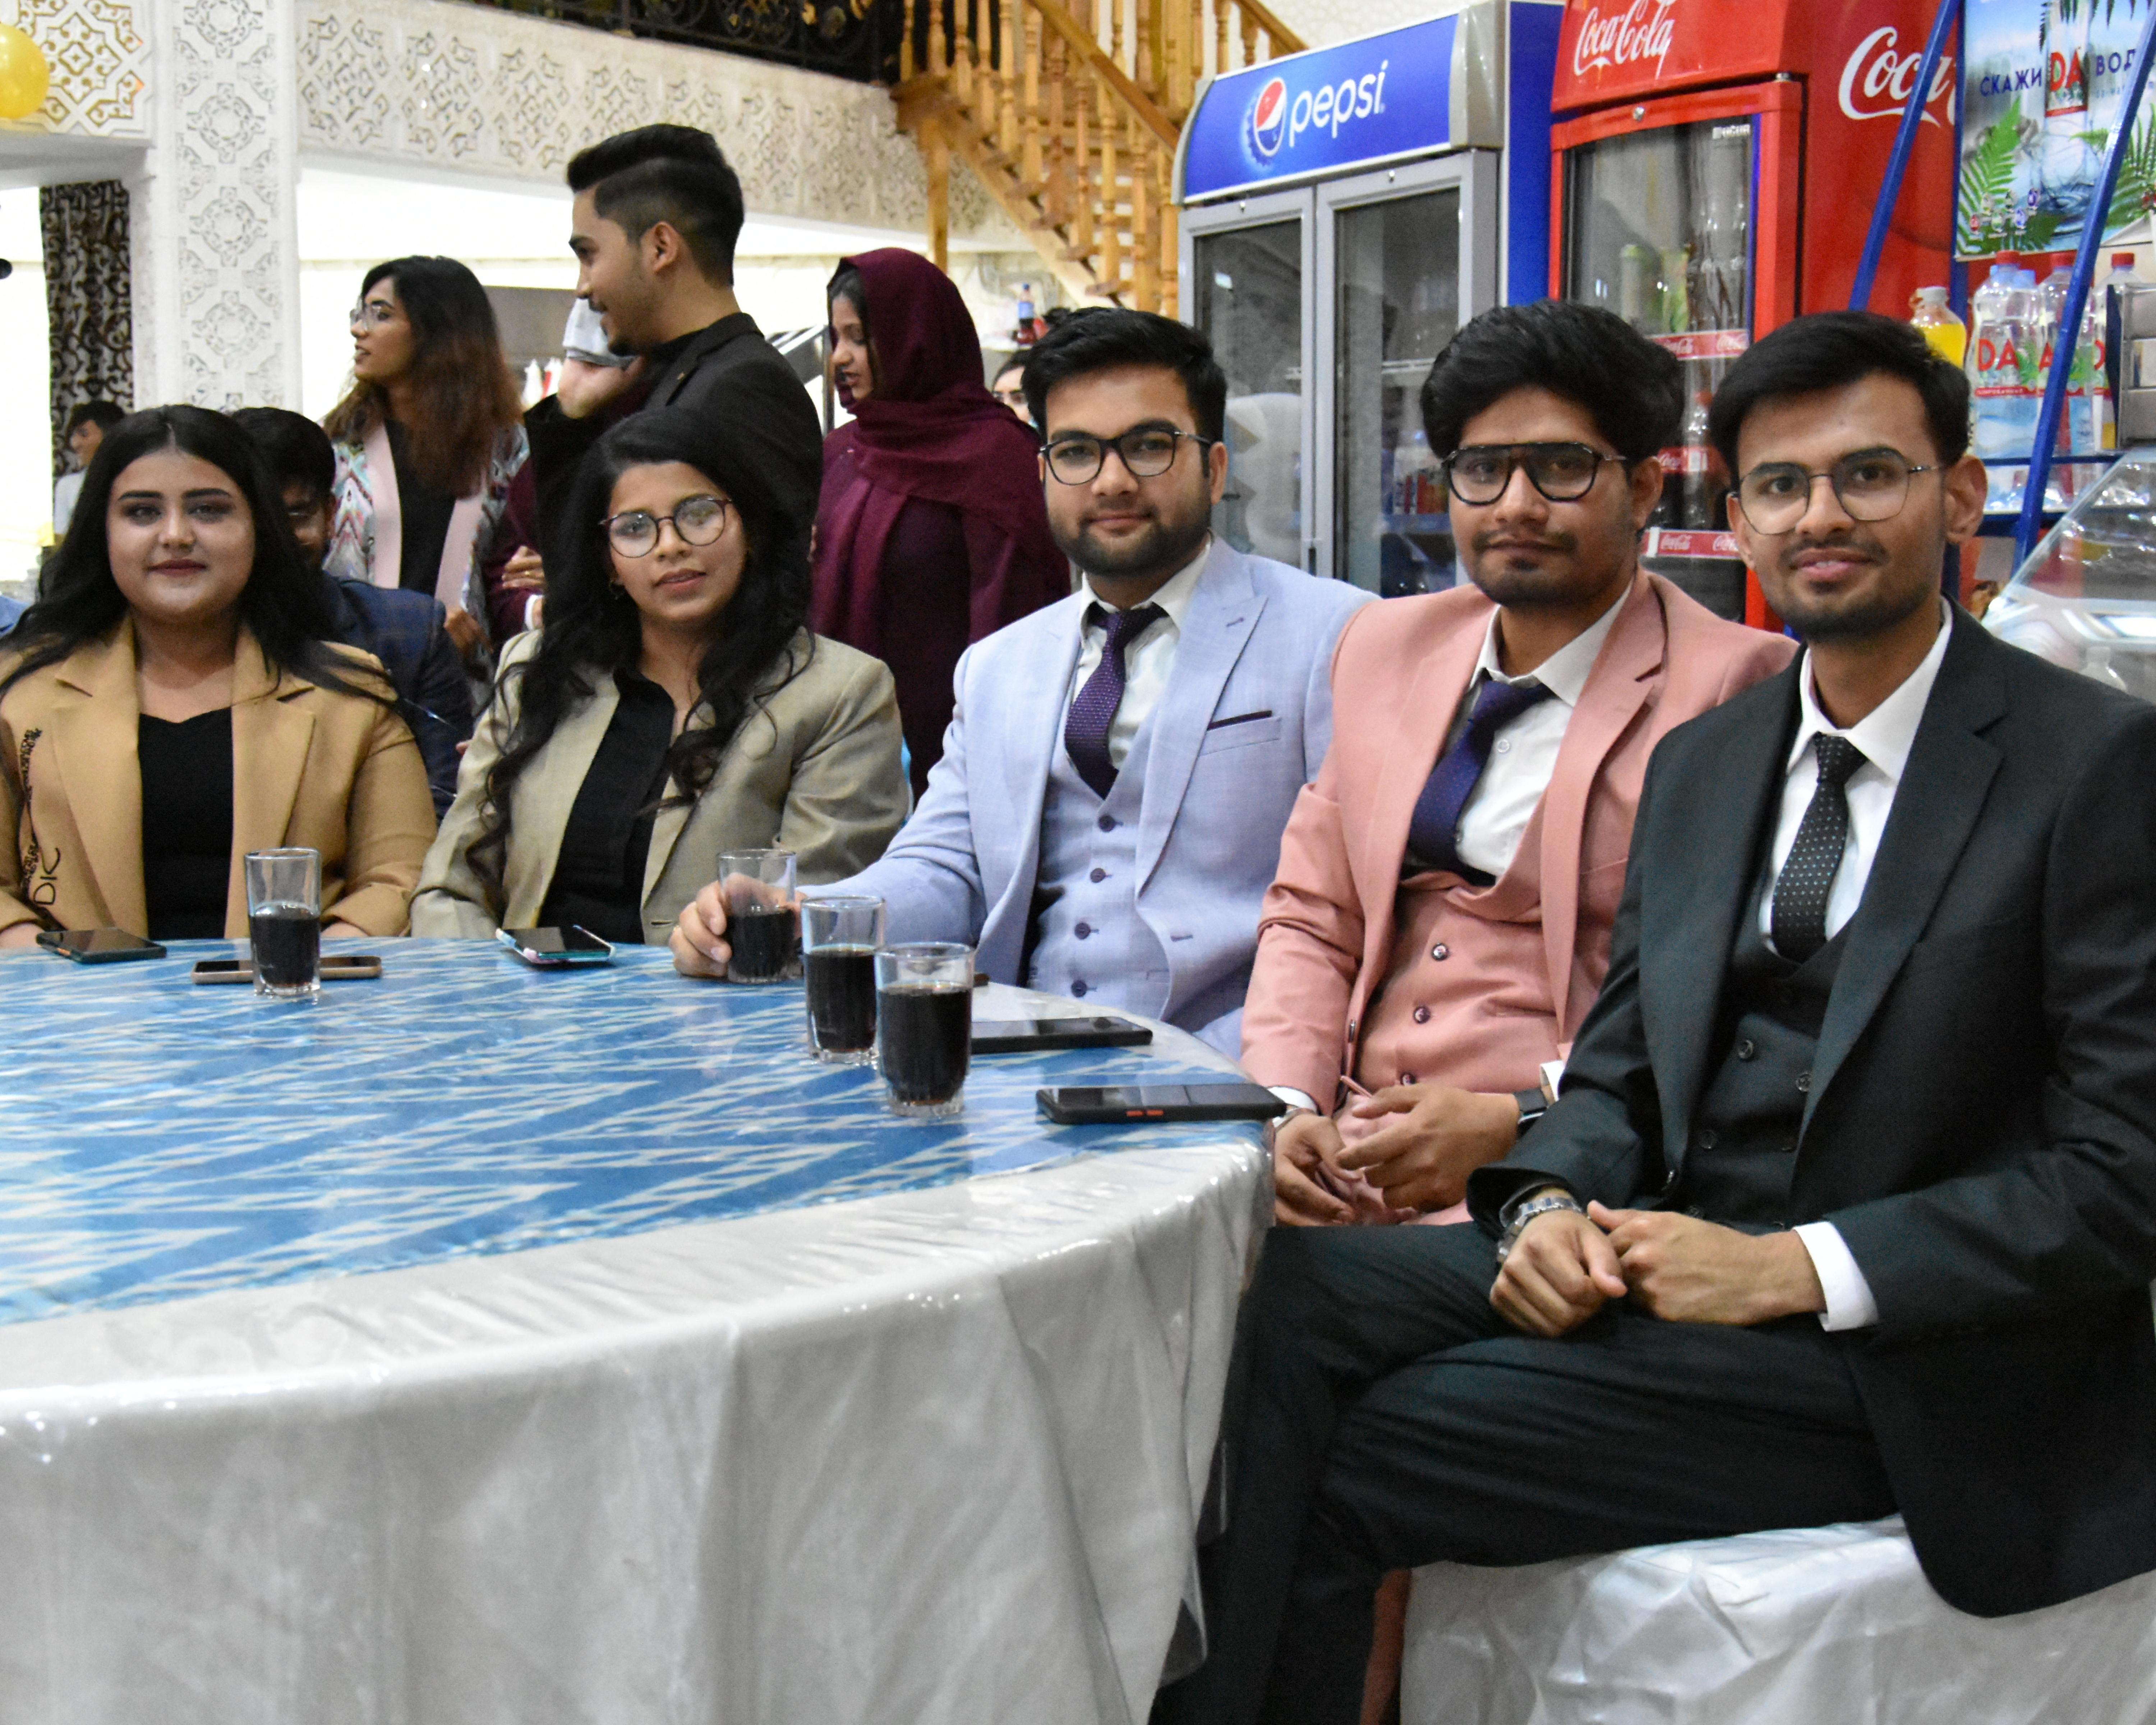 Students Enjoying after graduation in Peoplehive Cafe Uzbekistan